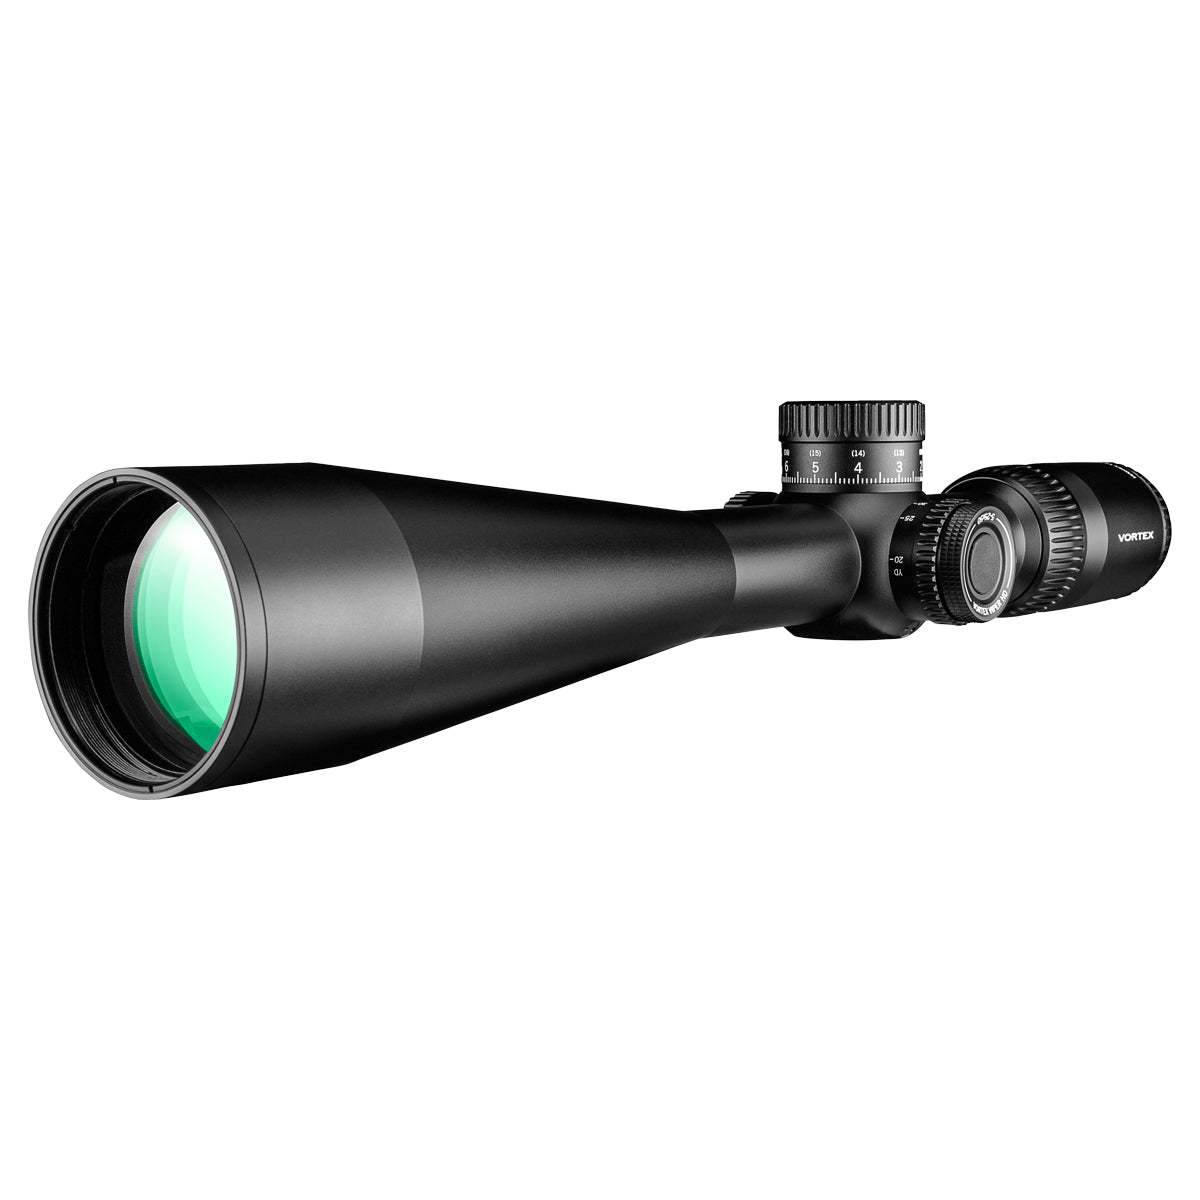 Vortex Viper HD 5-25x50 VMR-3 MRAD Riflescope in  by GOHUNT | Vortex Optics - GOHUNT Shop